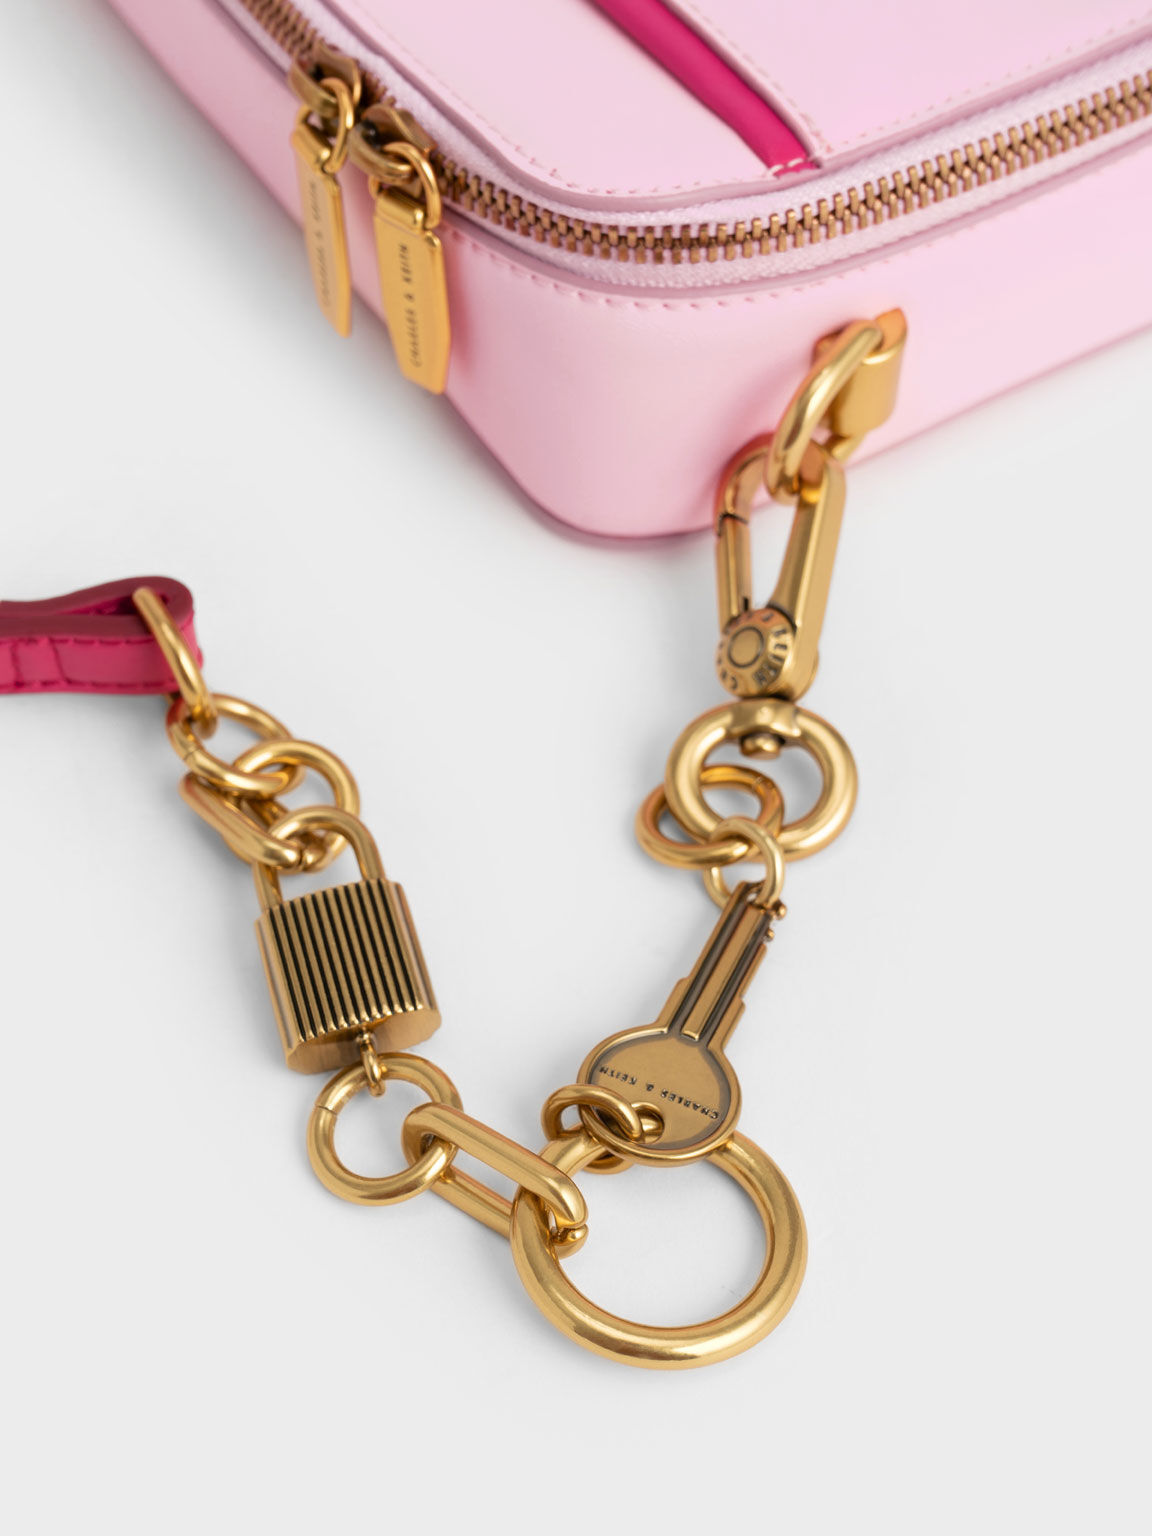 Pink Lock & Key Chain Handle Bag - CHARLES & KEITH PH